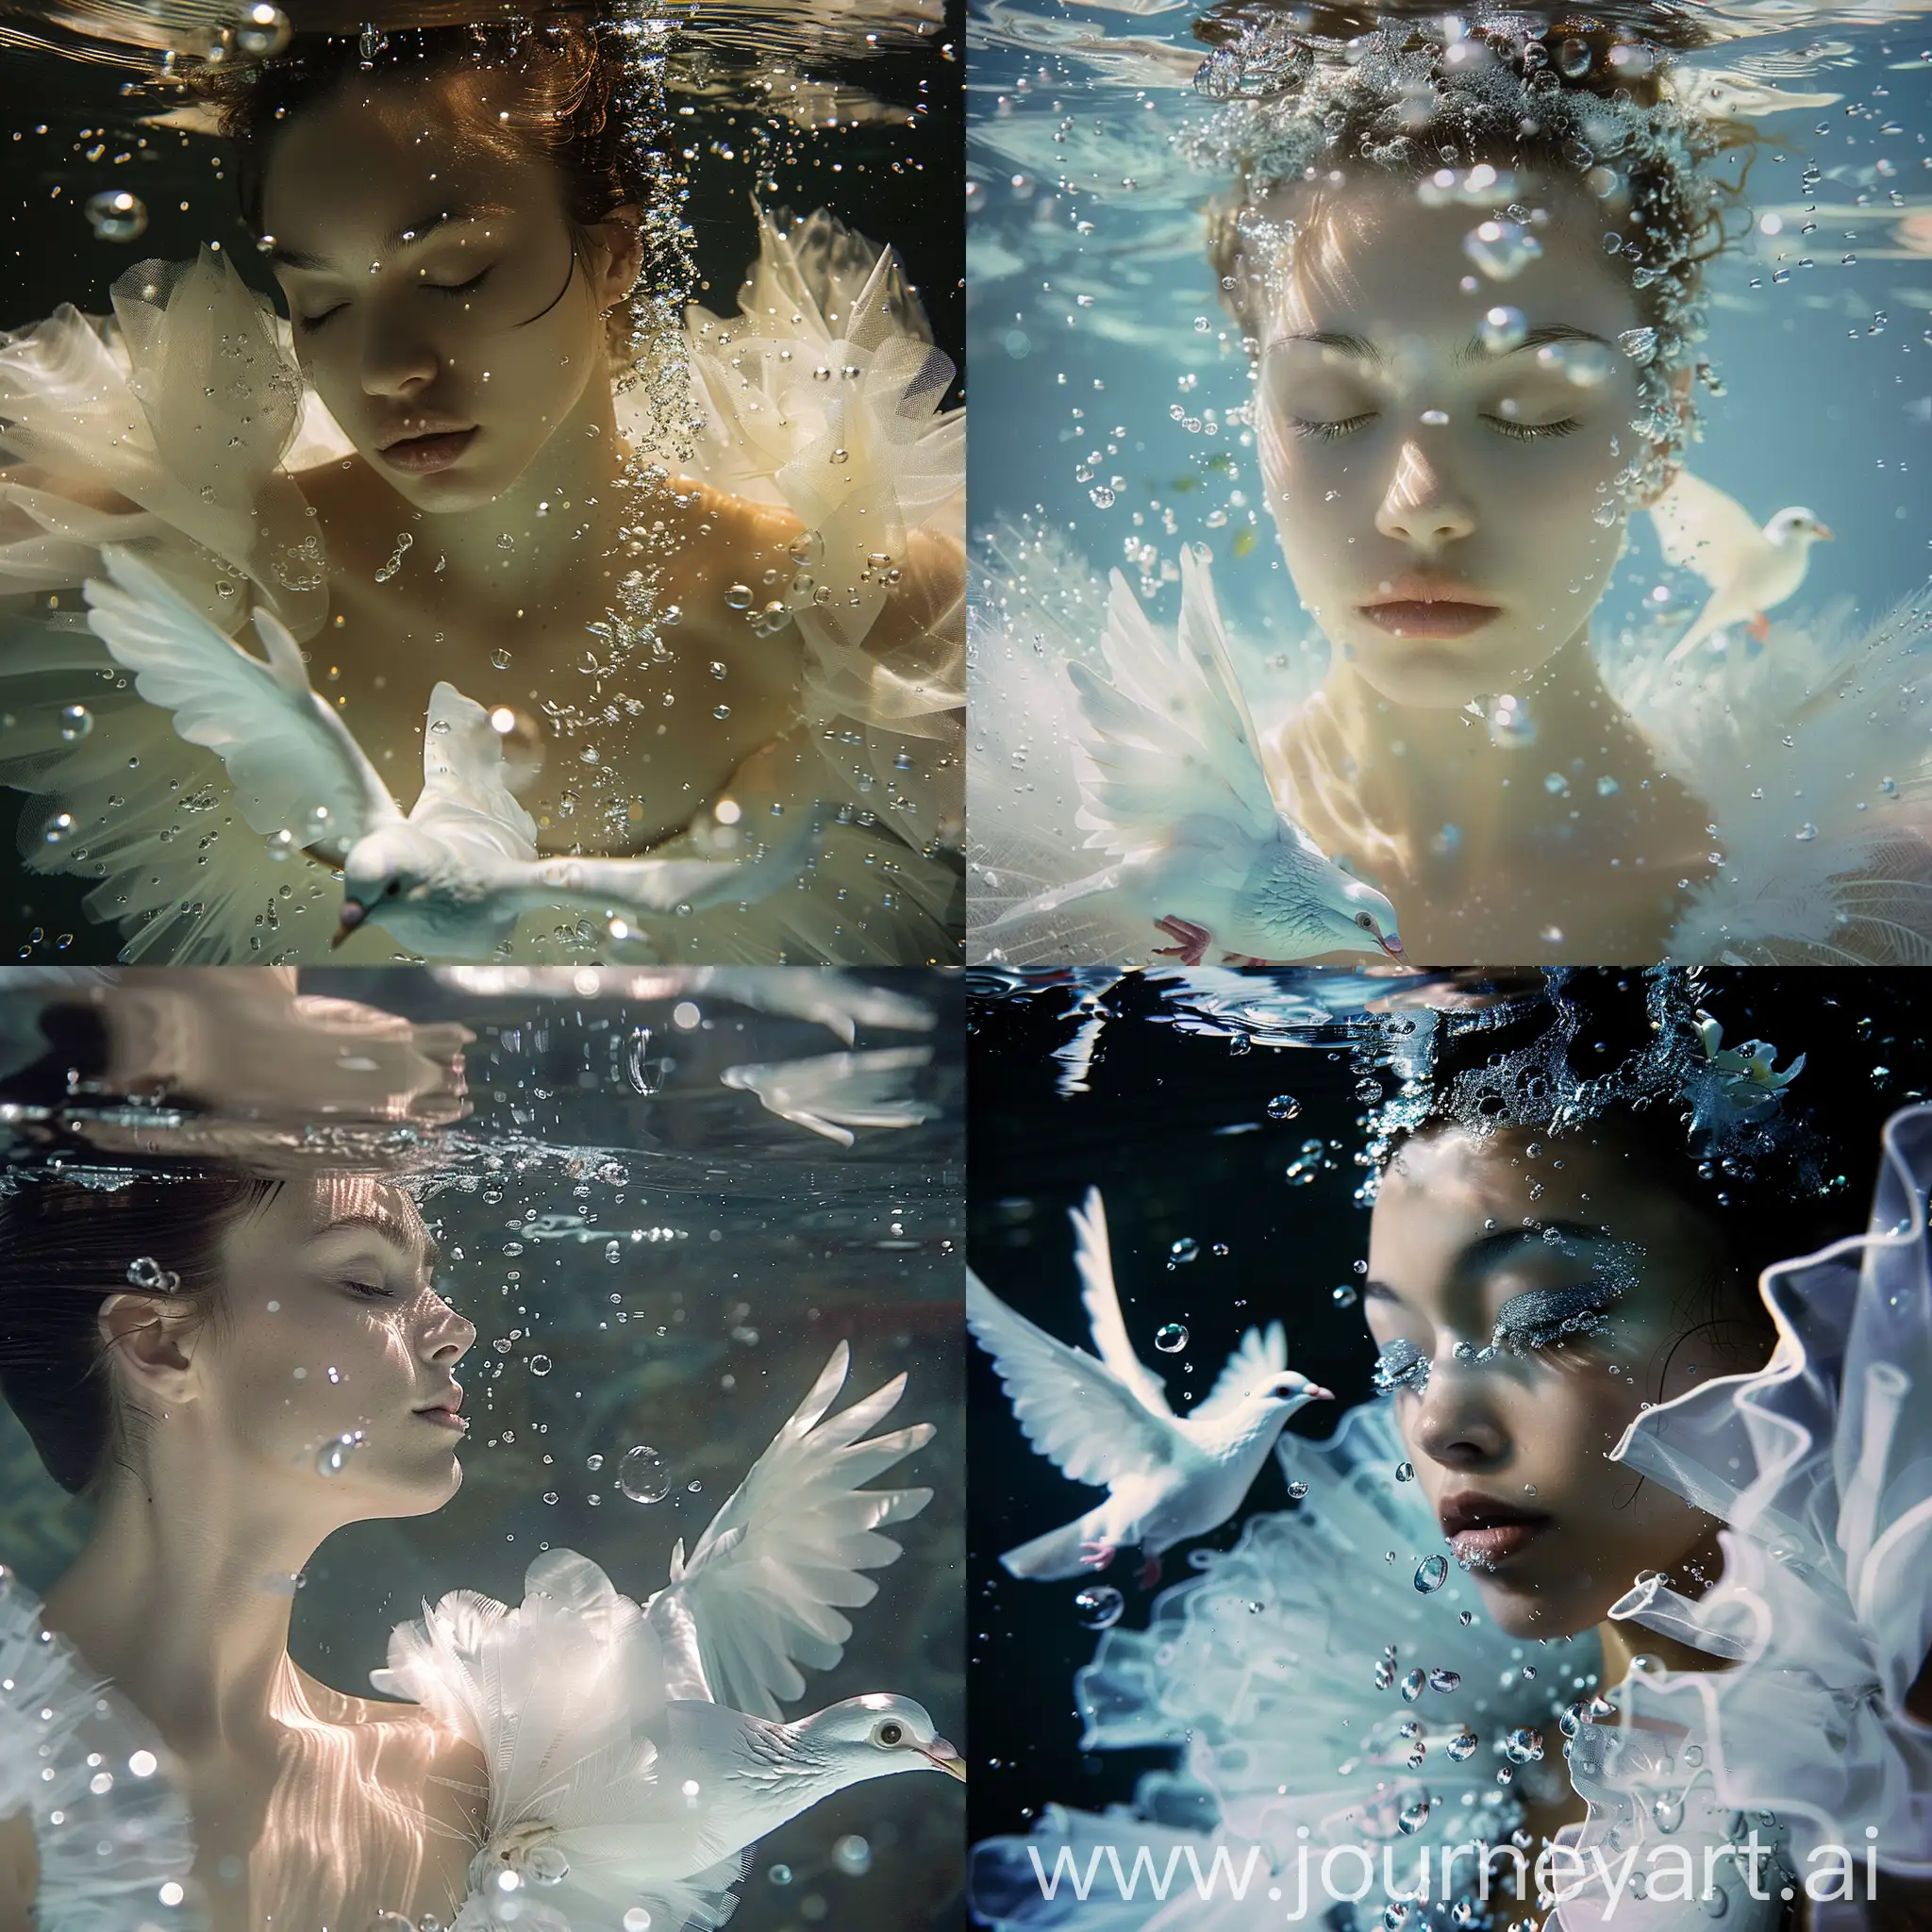 Graceful-Ballerina-Dancing-Underwater-with-White-Dove